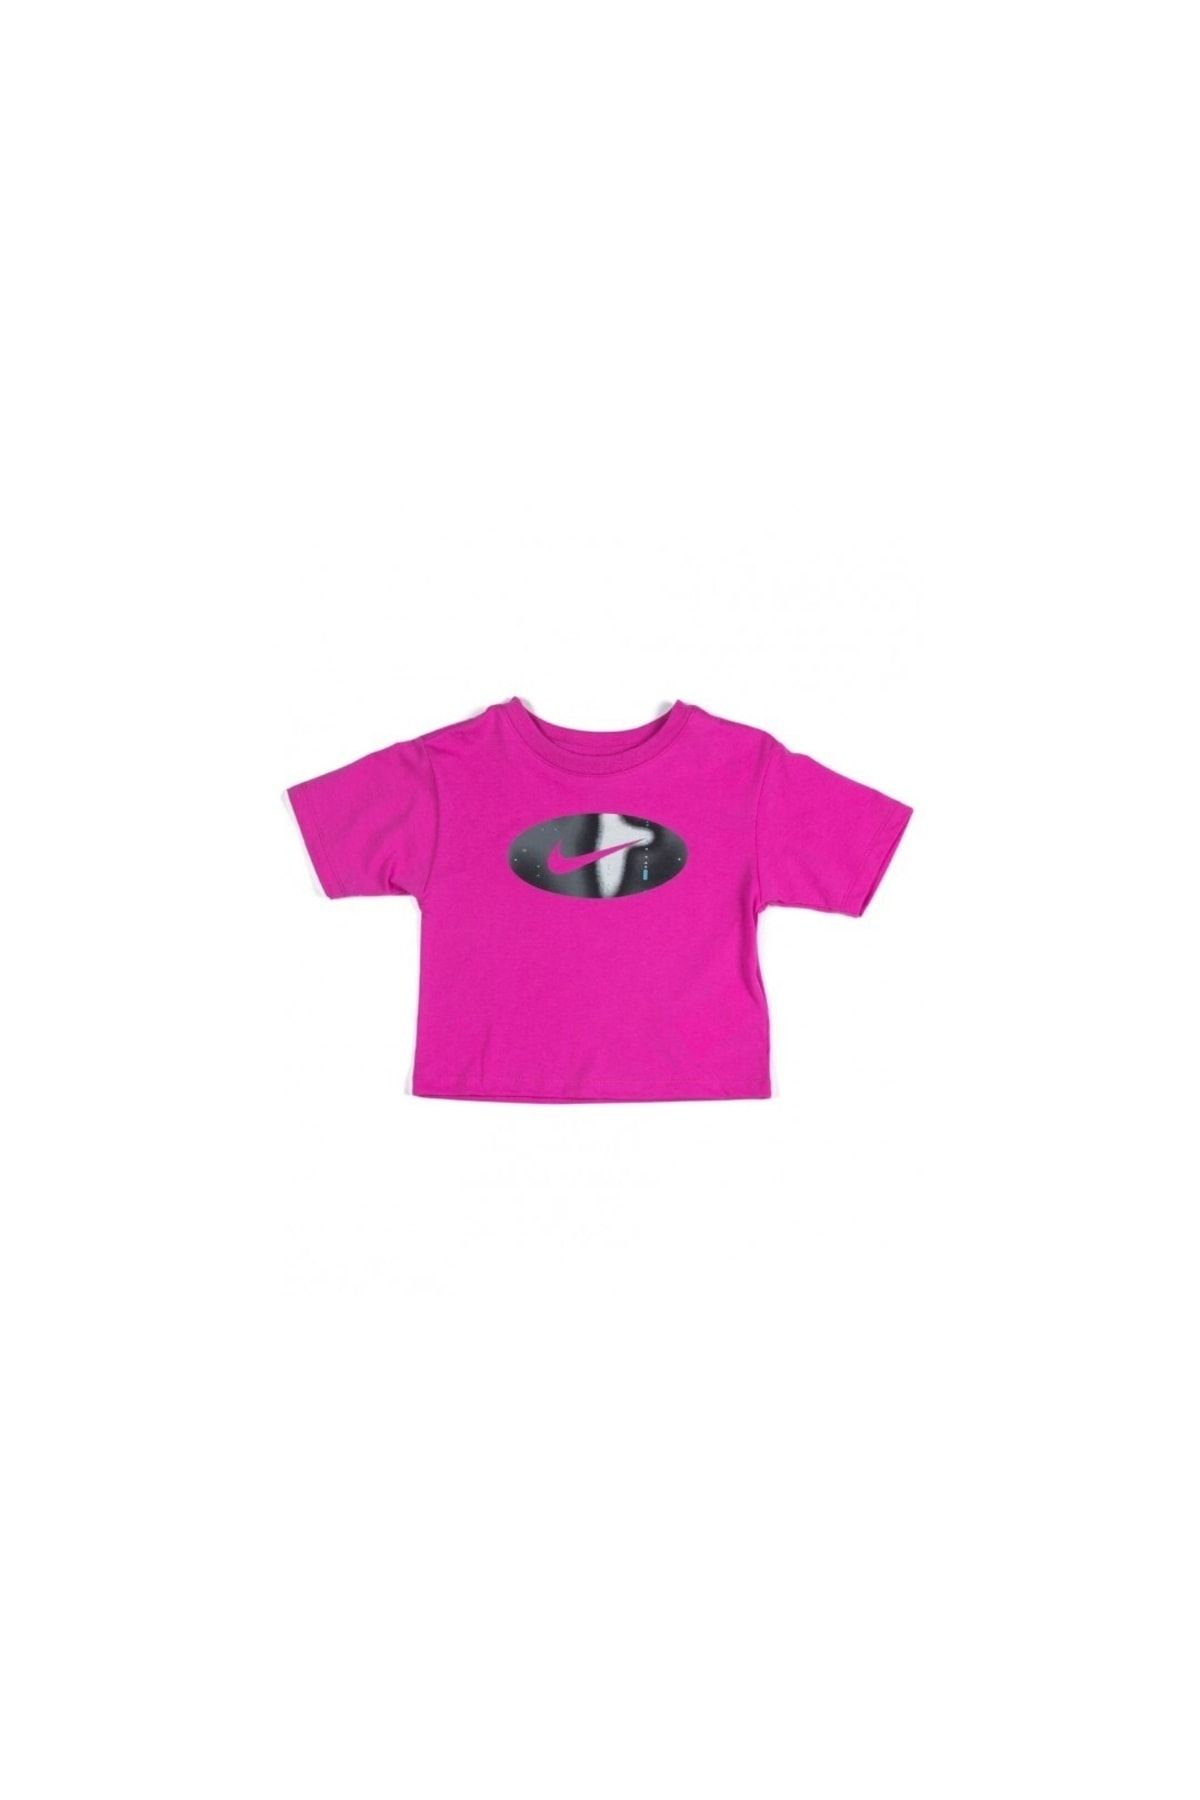 Nike Kıds Create Gfx Boxy Çocuk T-shirt